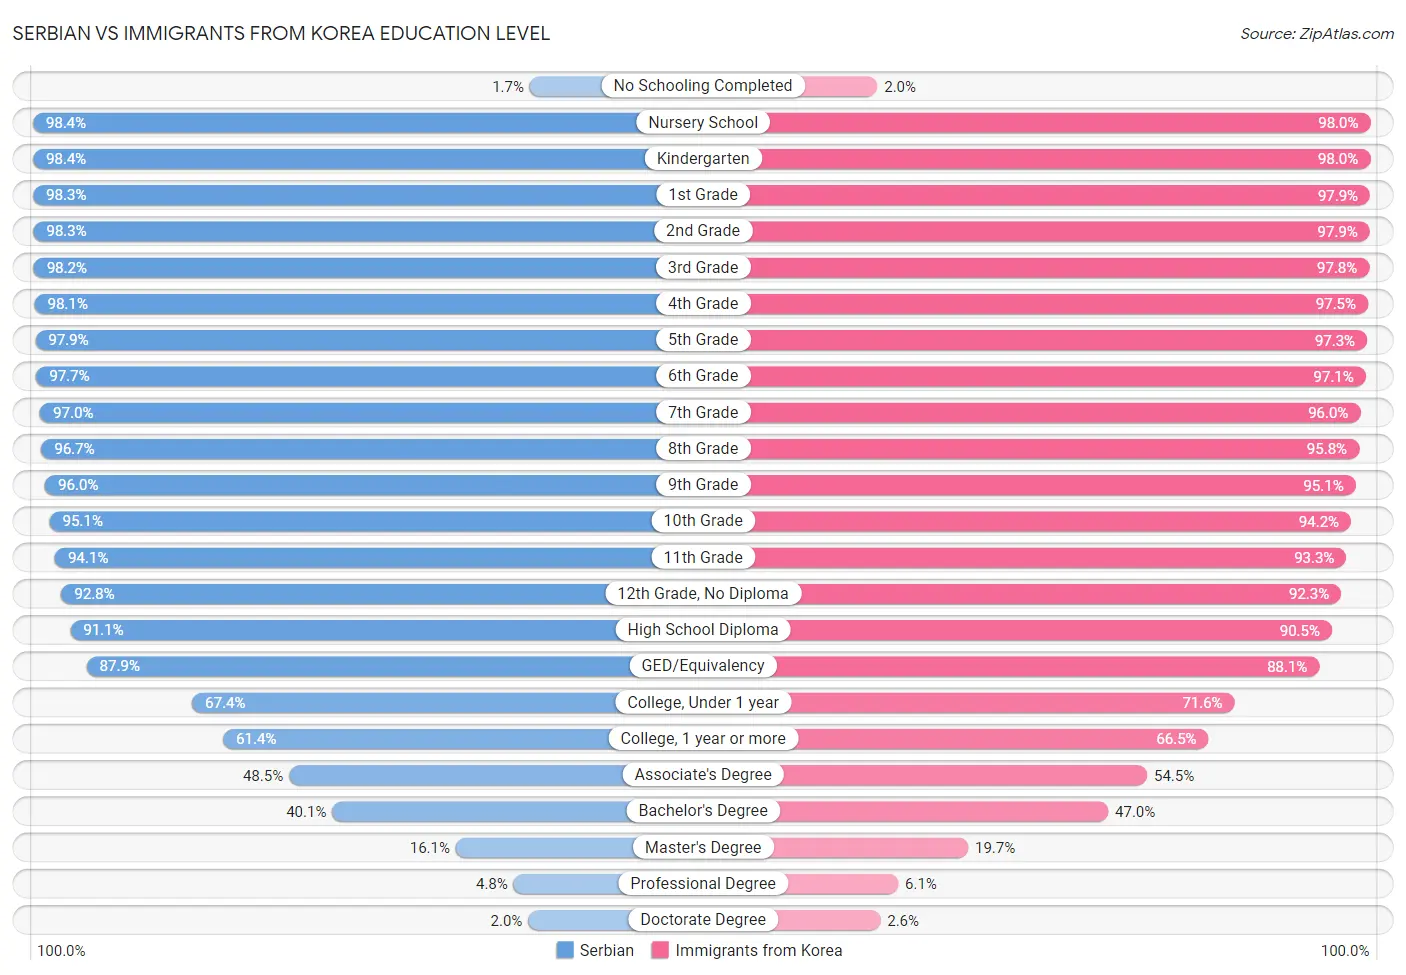 Serbian vs Immigrants from Korea Education Level